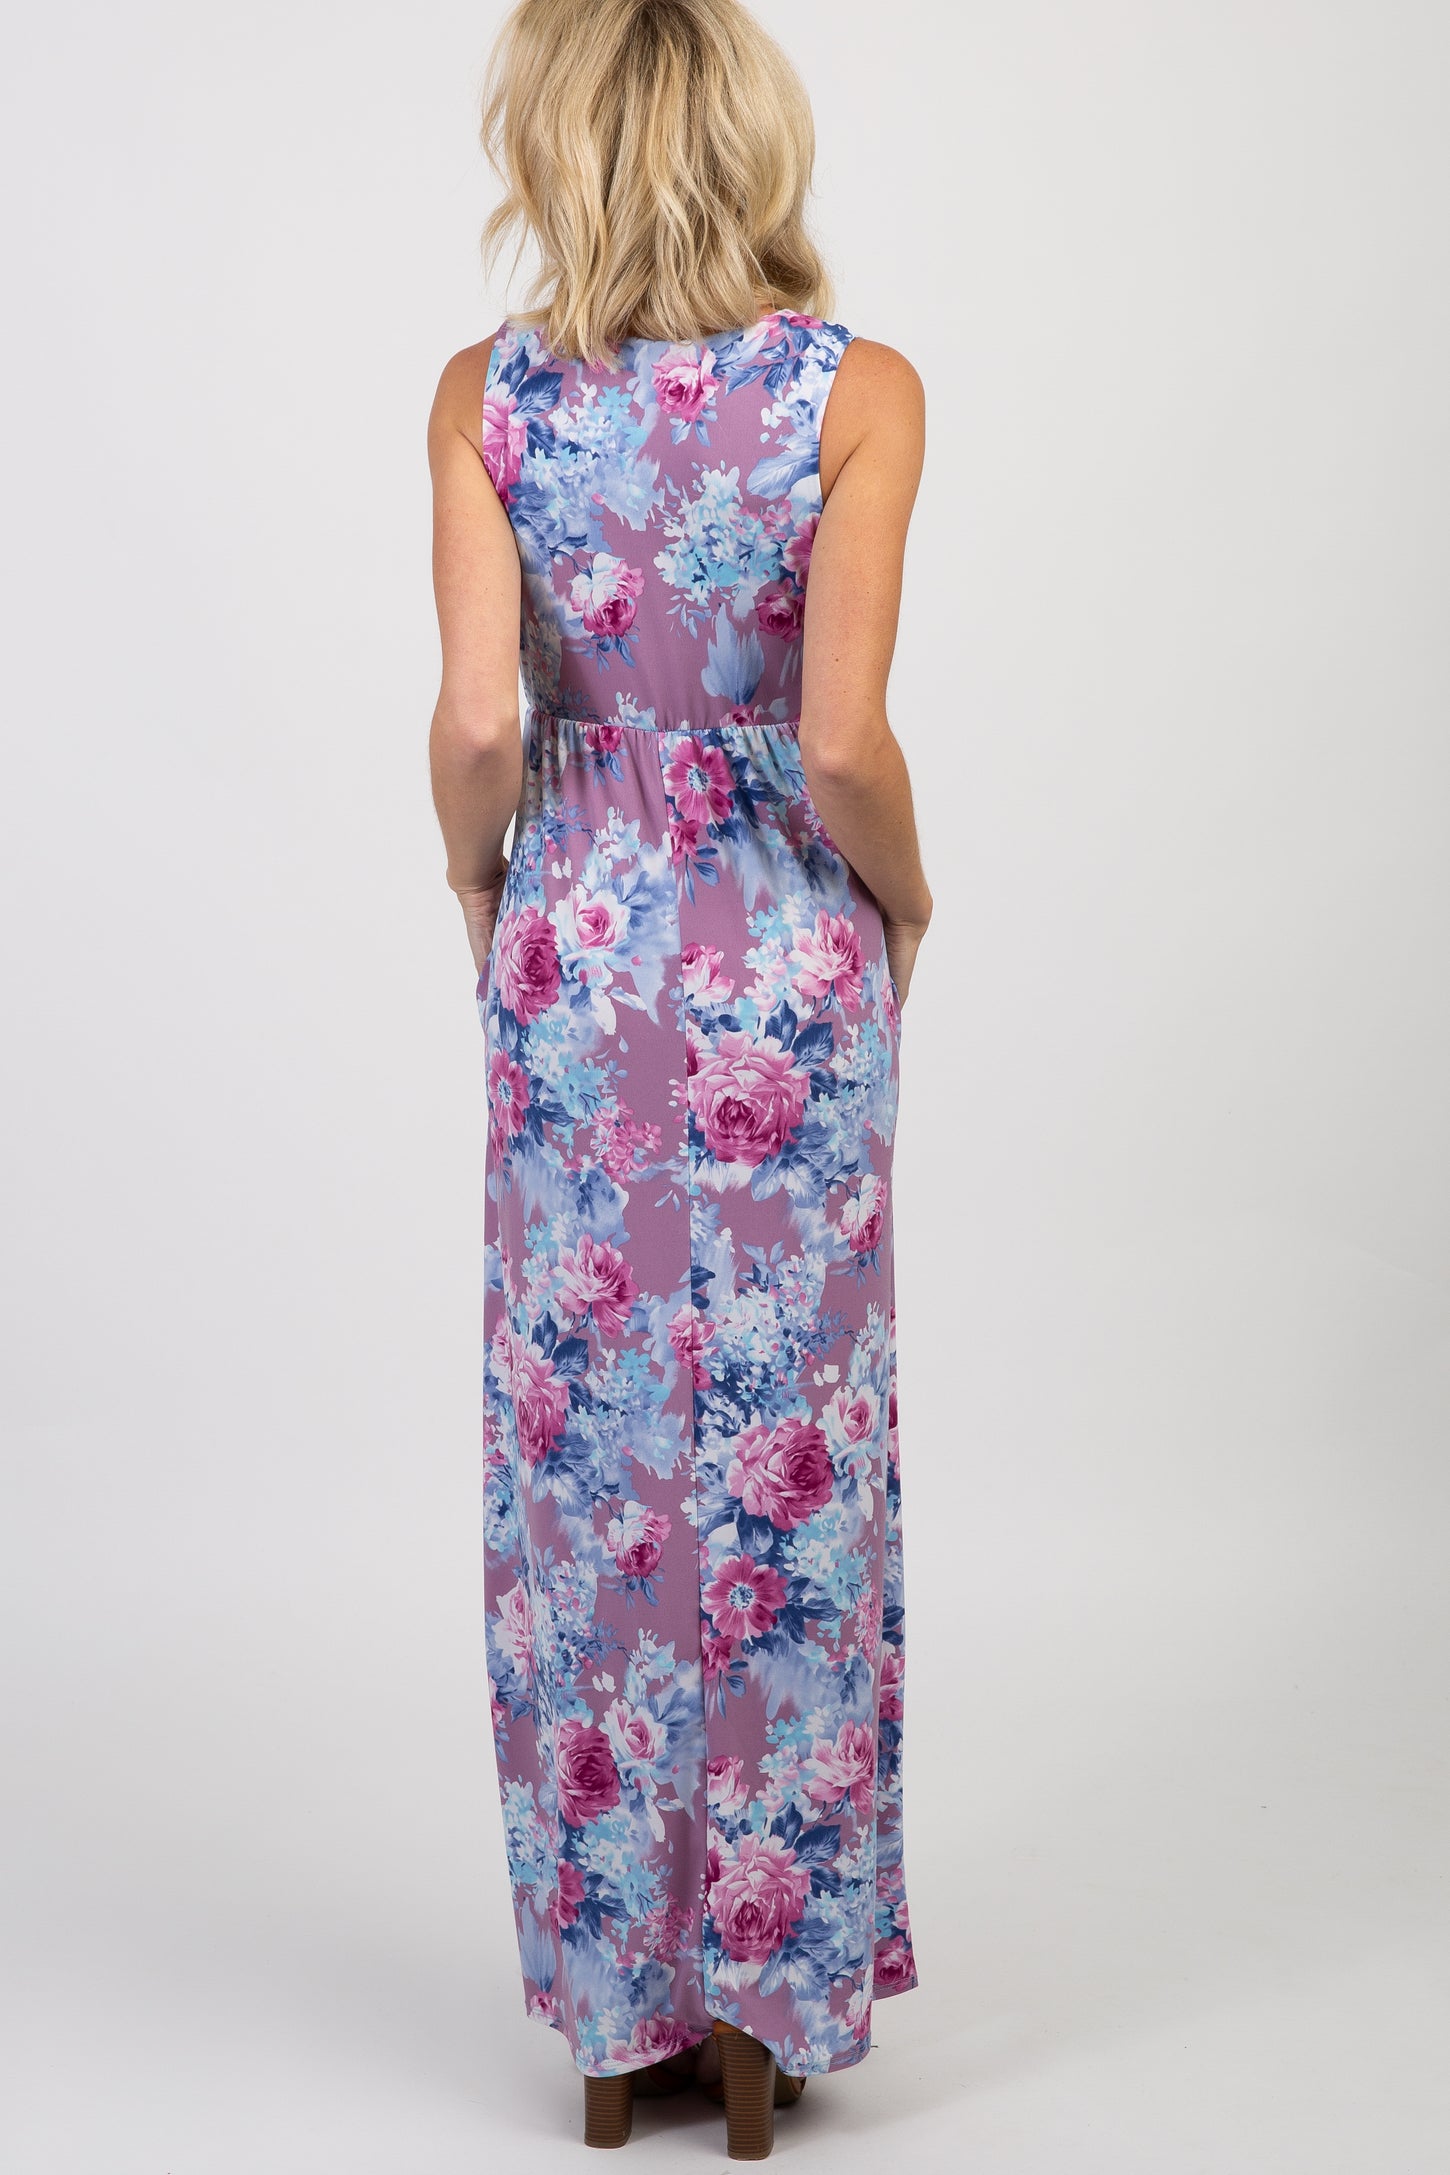 PinkBlush Lavender Floral Sleeveless Maxi Dress